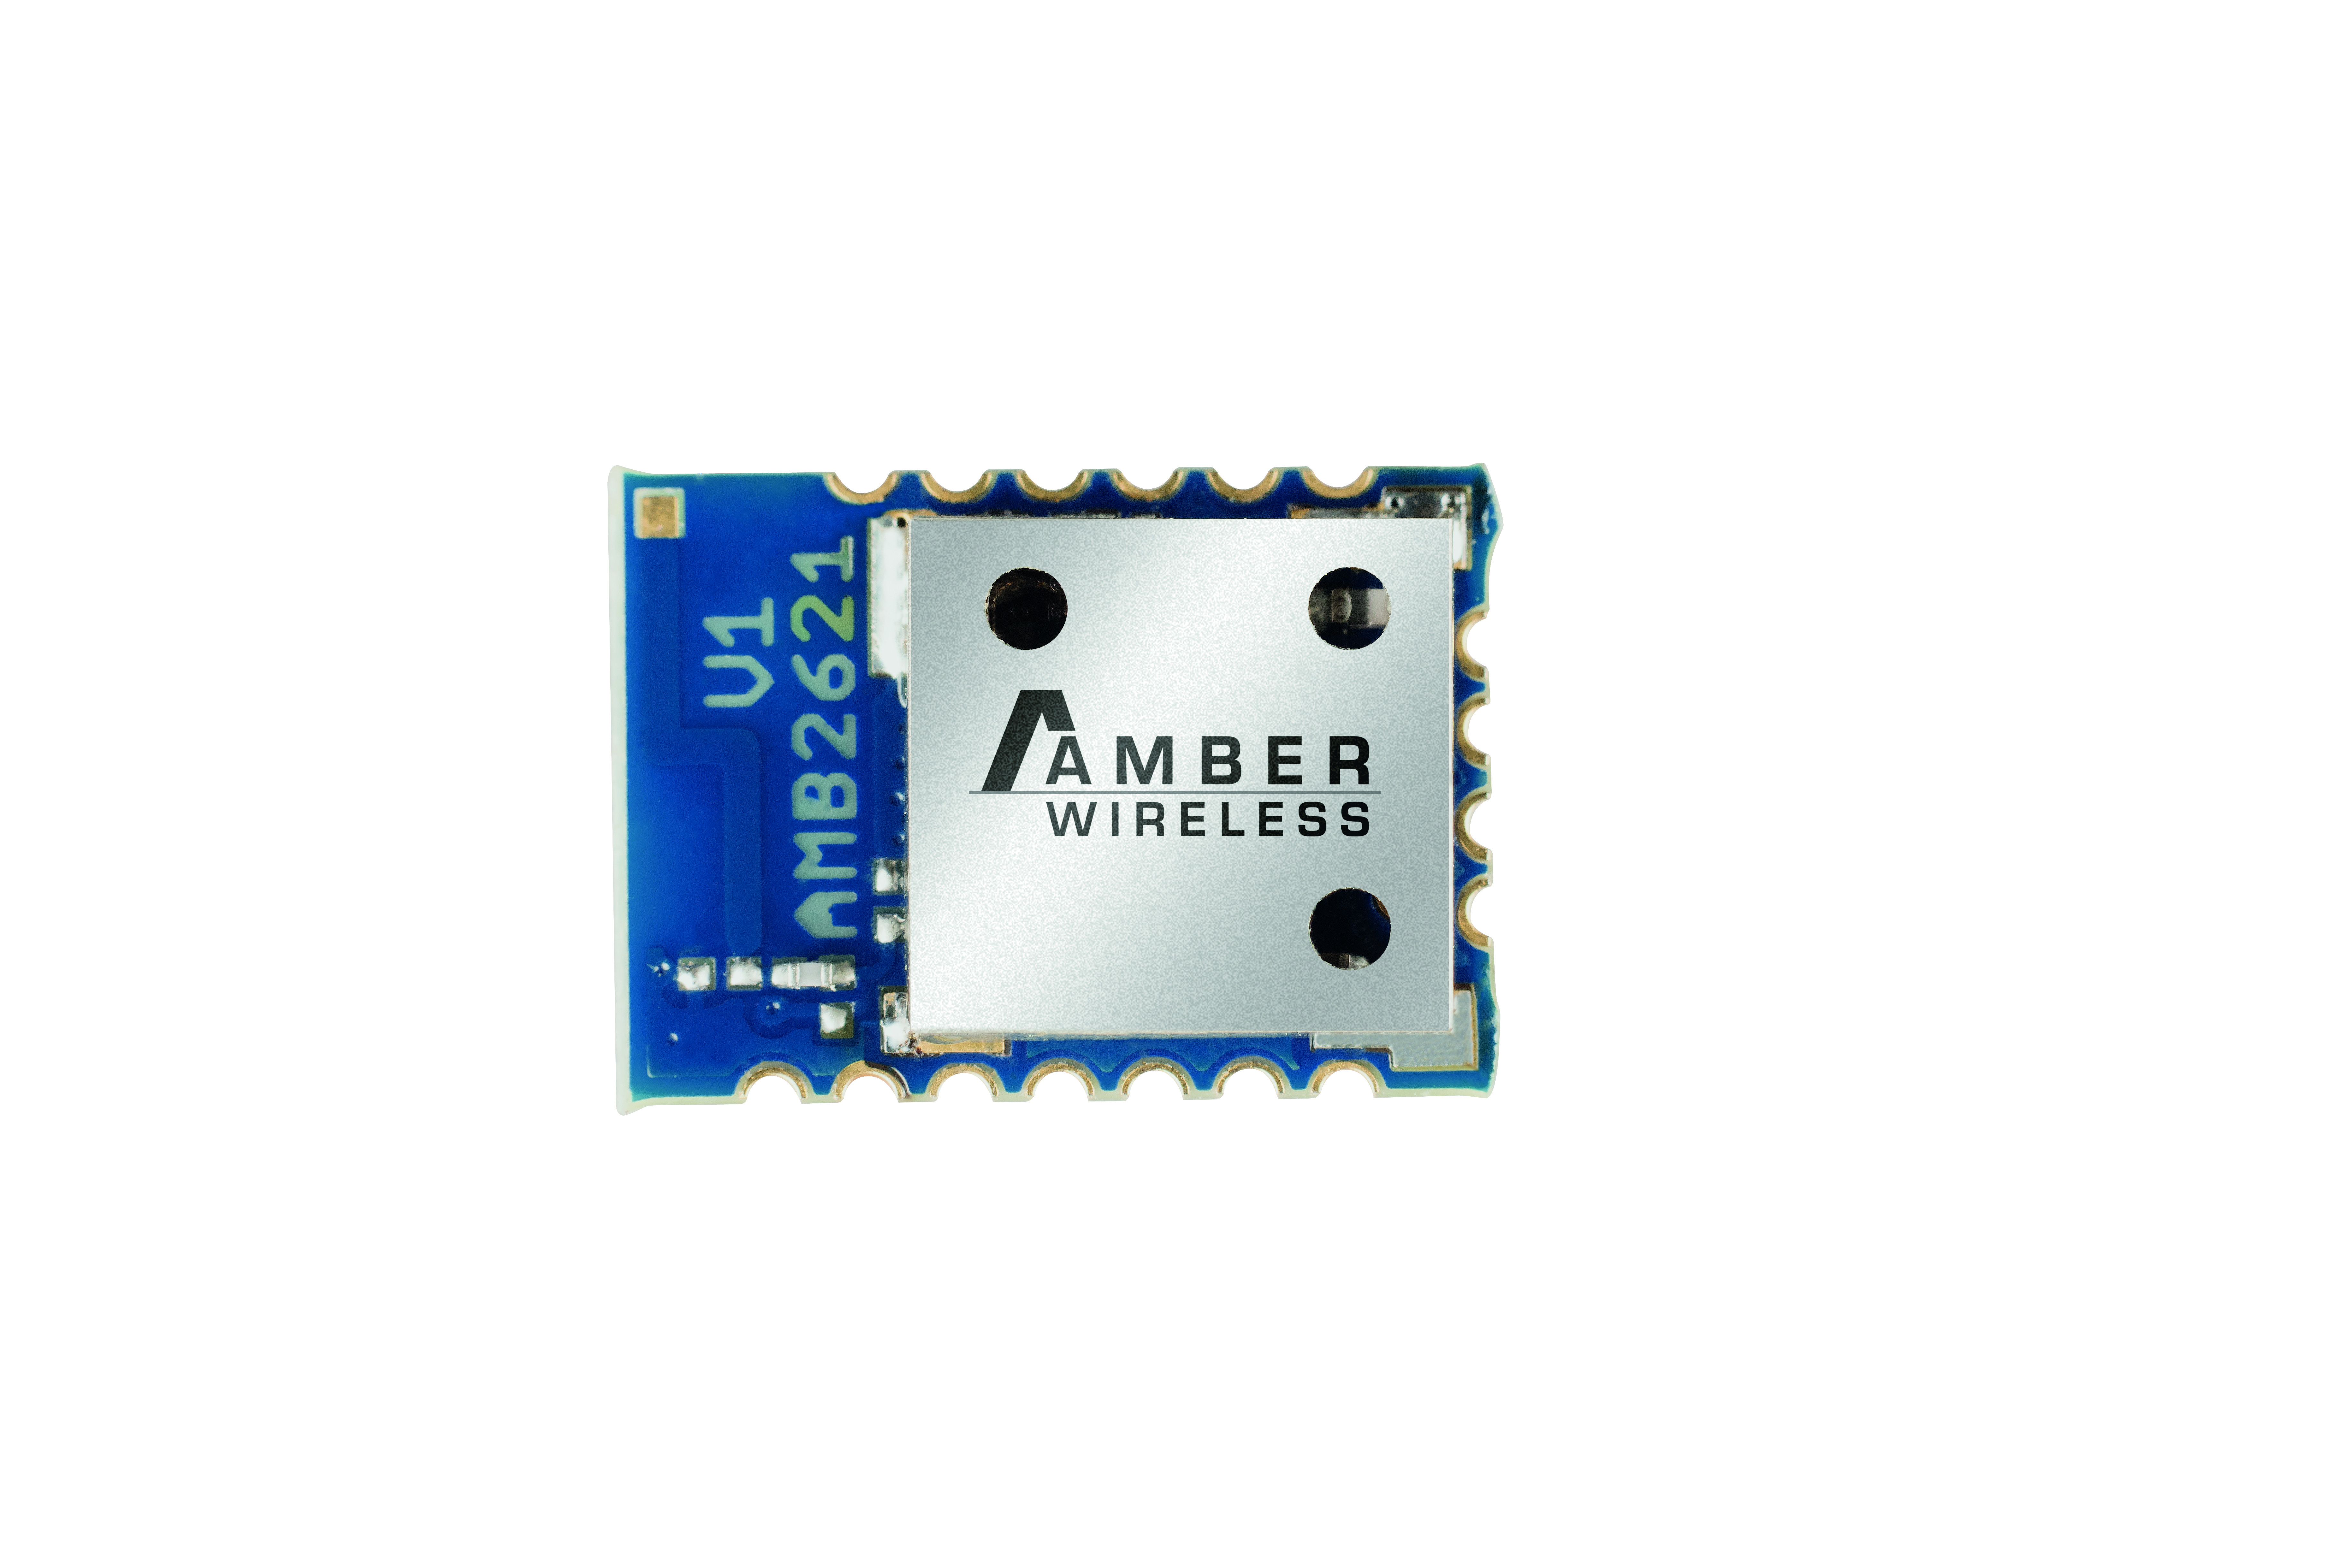 AMBER wireless Unveils AMB2621 Bluetooth Smart Module